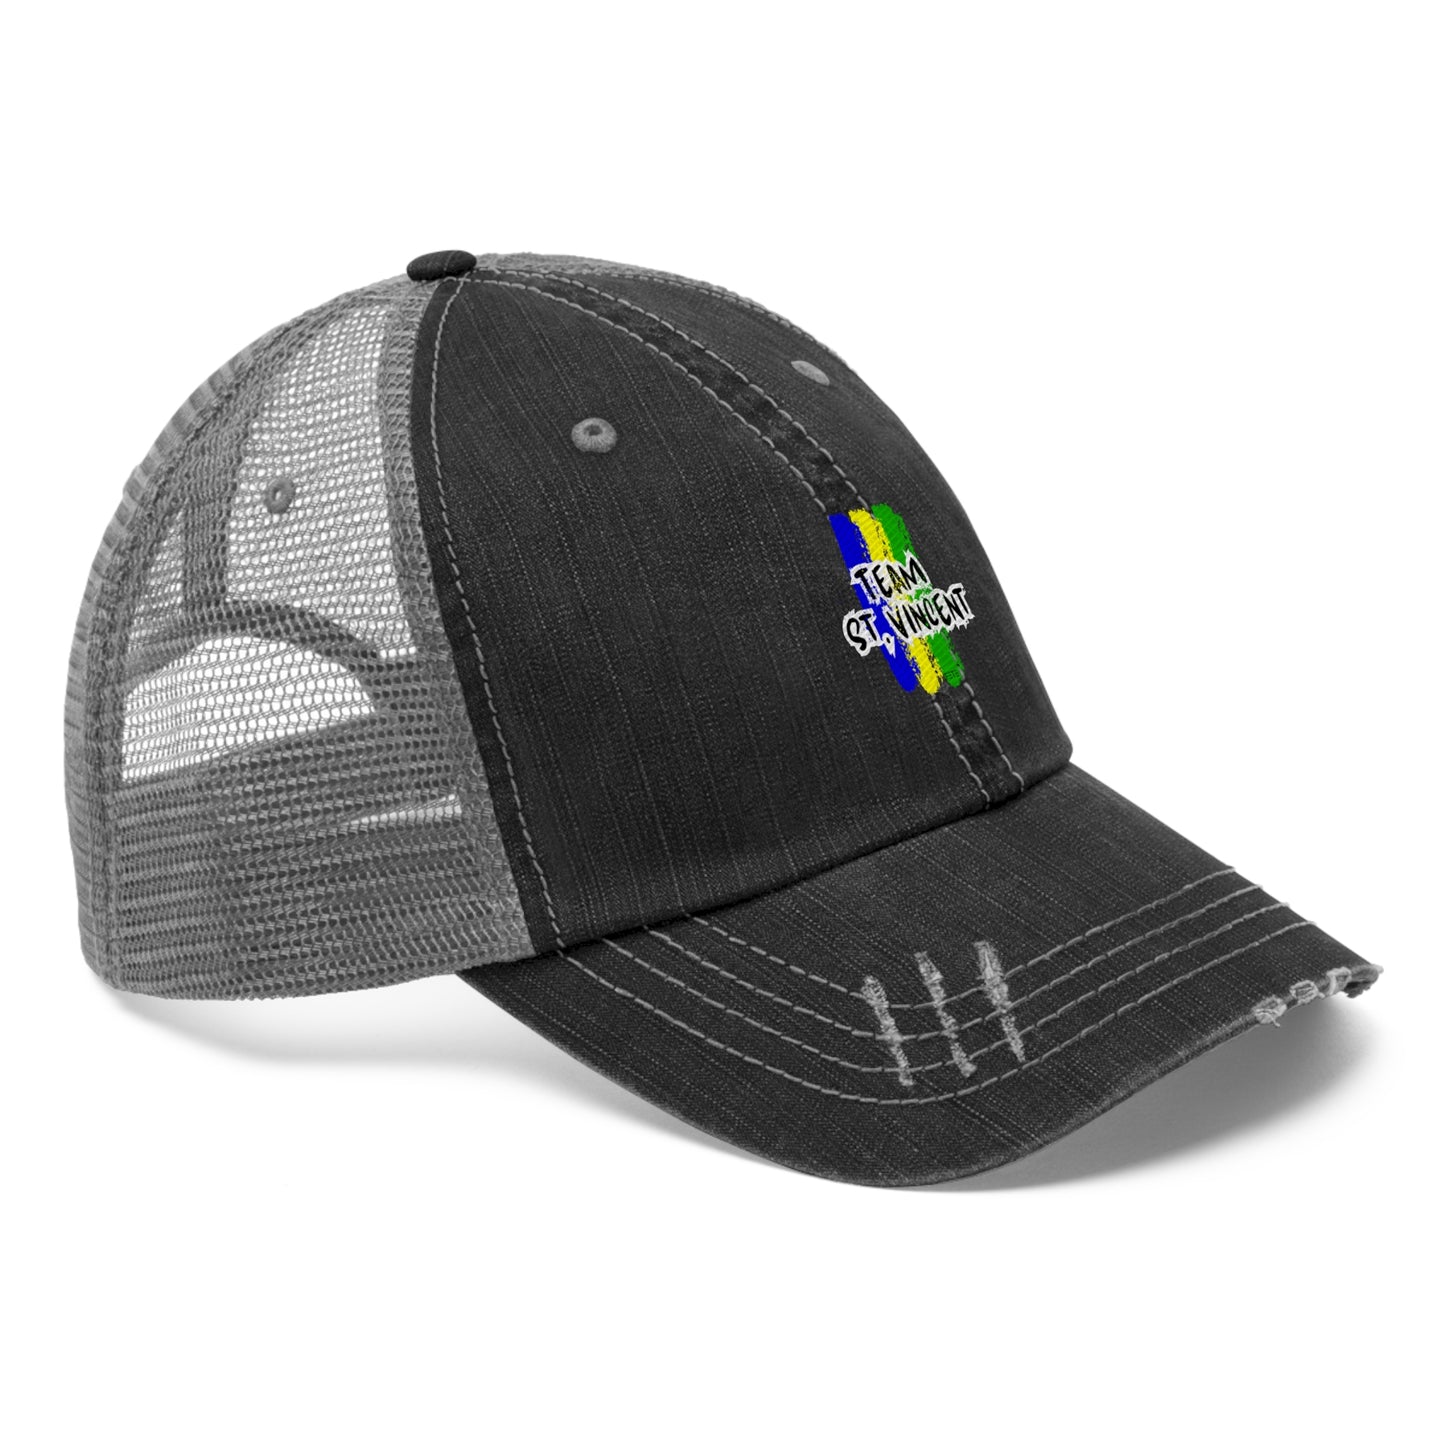 Team St. Vincent Trucker Hat